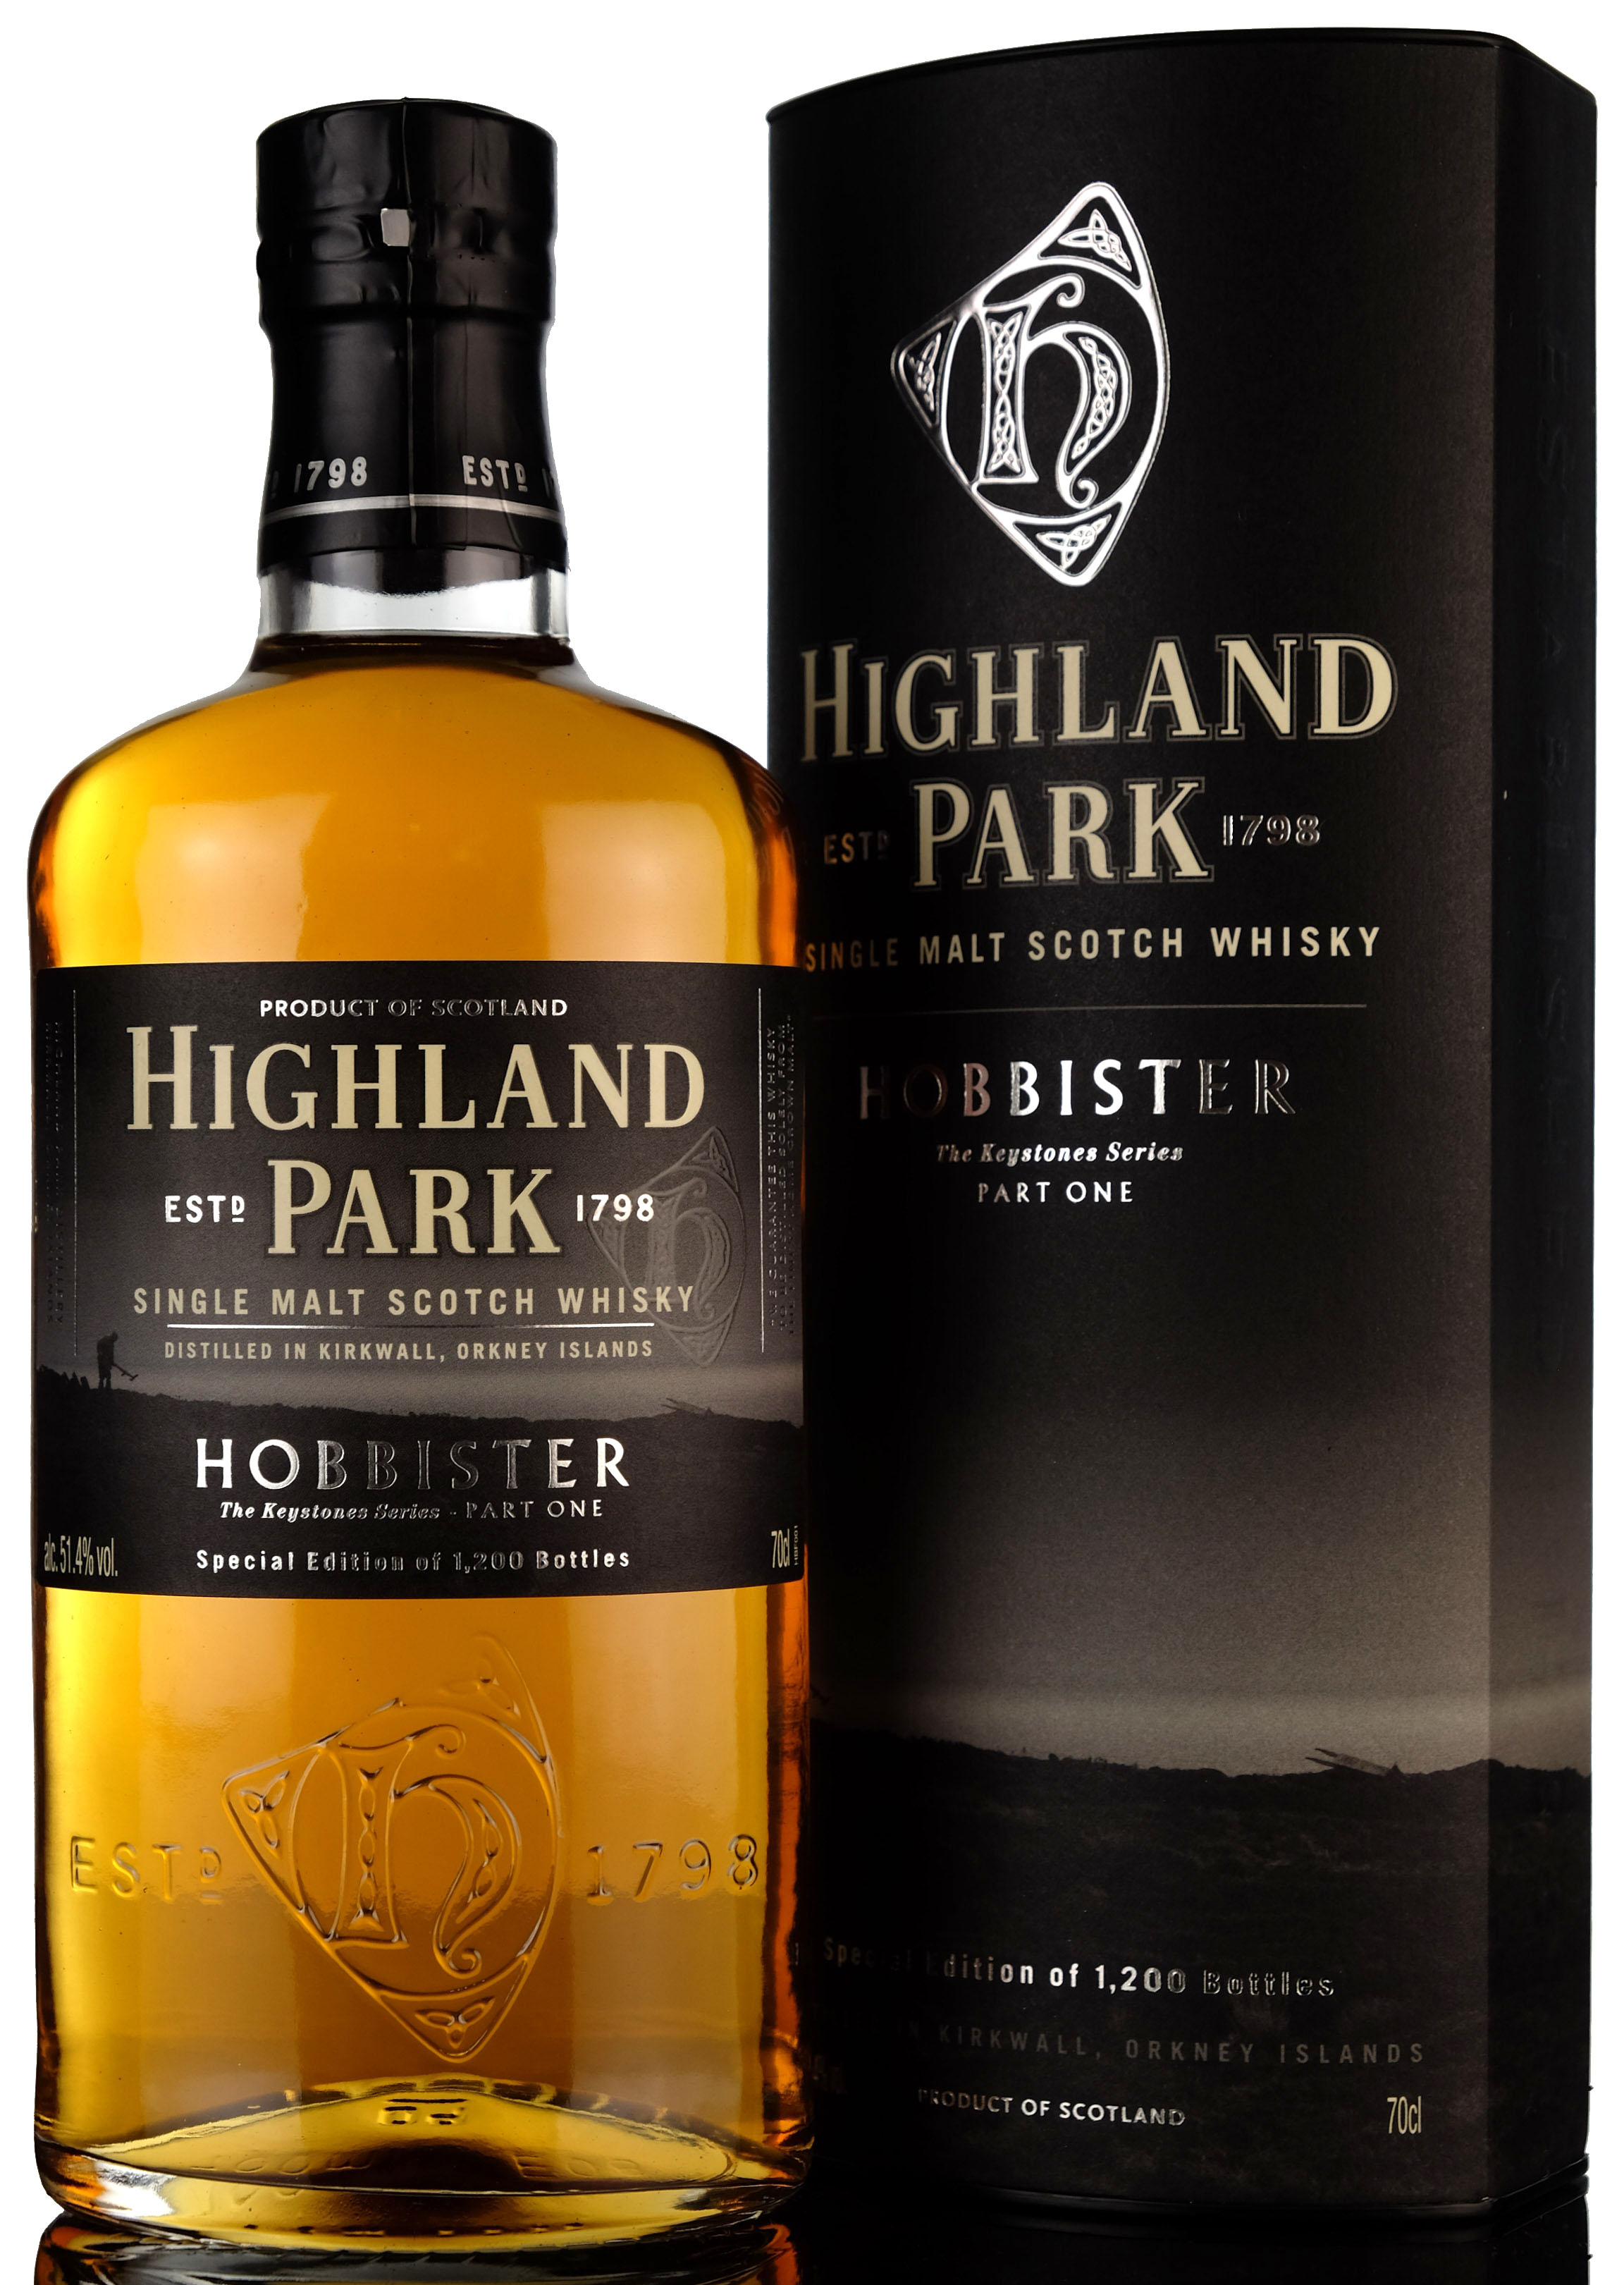 Highland Park Hobbister - Keystones Series Part One